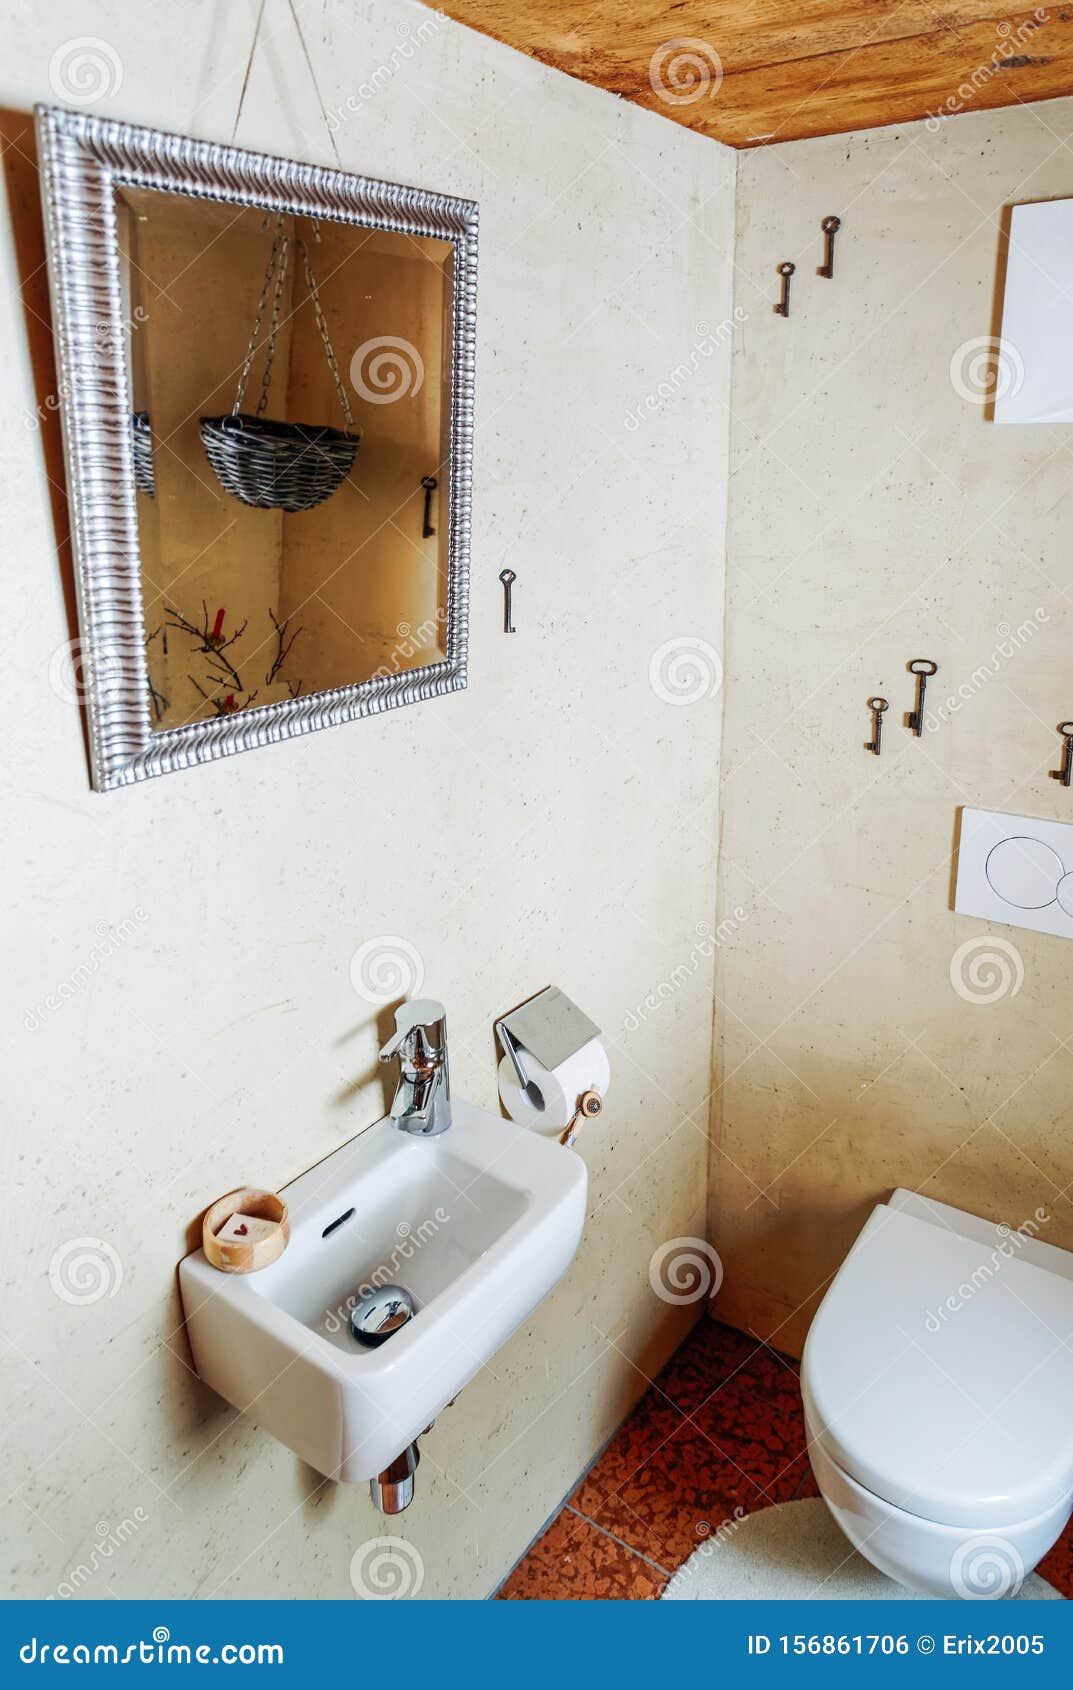 spannend mannetje Levendig Interior of Modern Bathroom Design Toilet Bowl Sink Mirror Stock Photo -  Image of modern, home: 156861706